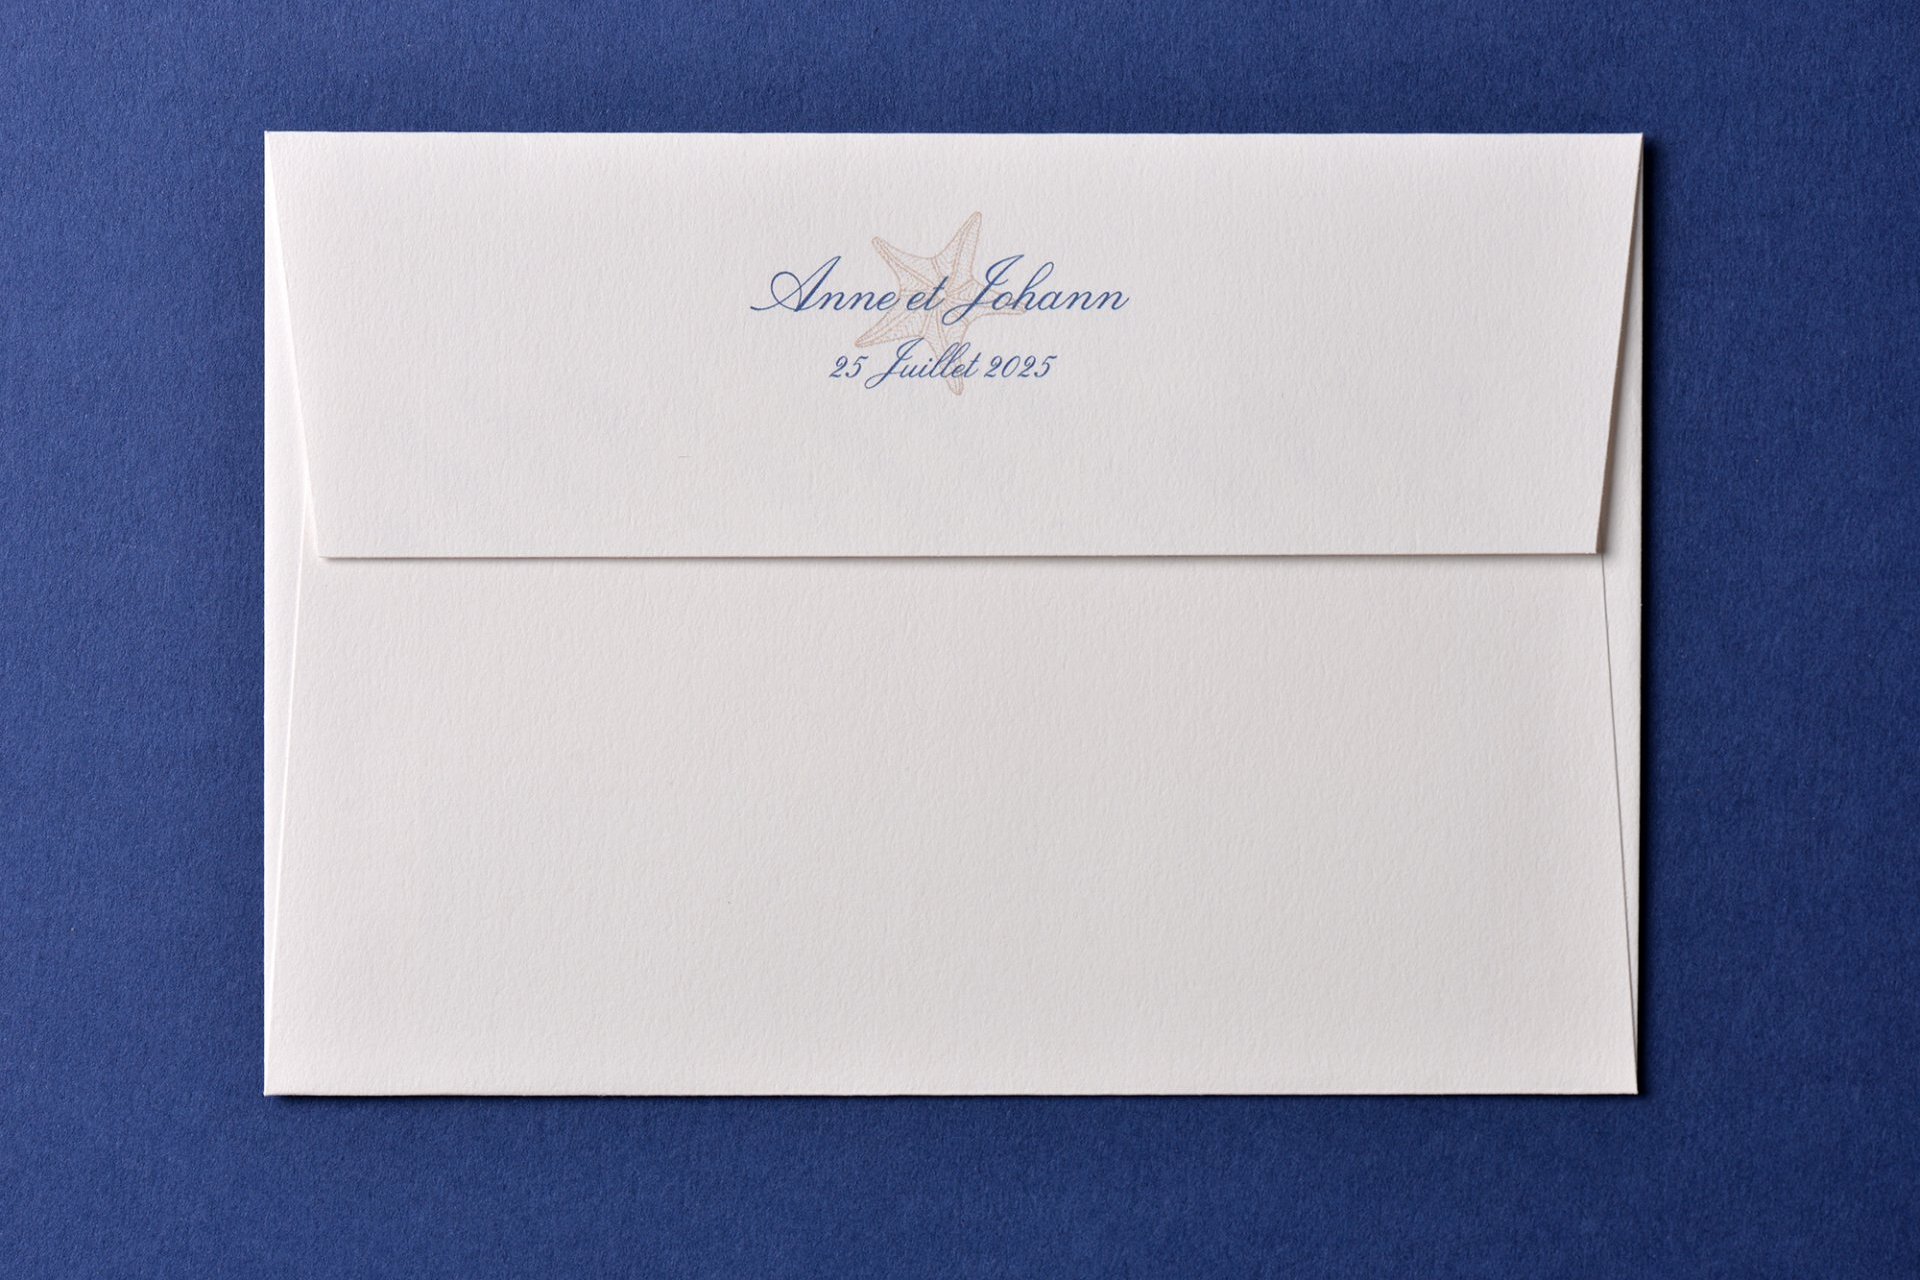 Impression Verso Enveloppe / 114 x 162 mm / Passport Bleu Roi Anne & Johann